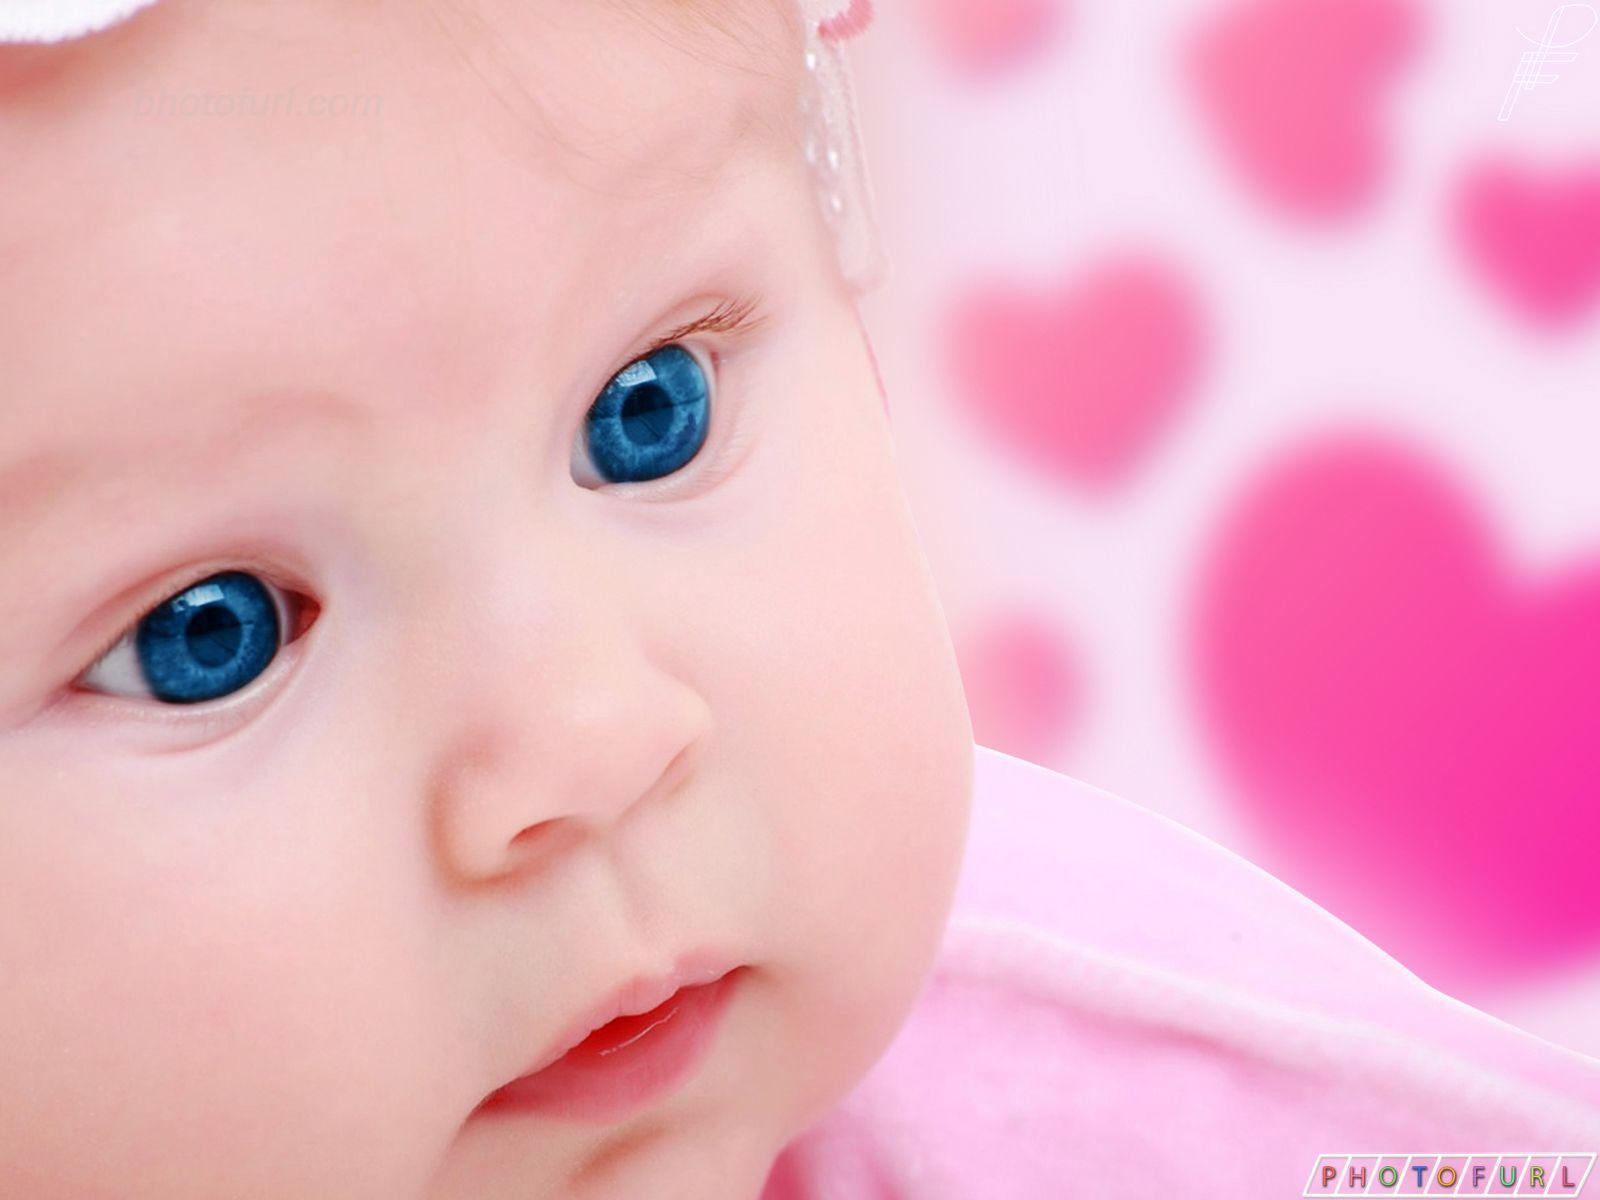 Cute Baby Wallpaper 2013 Free Download